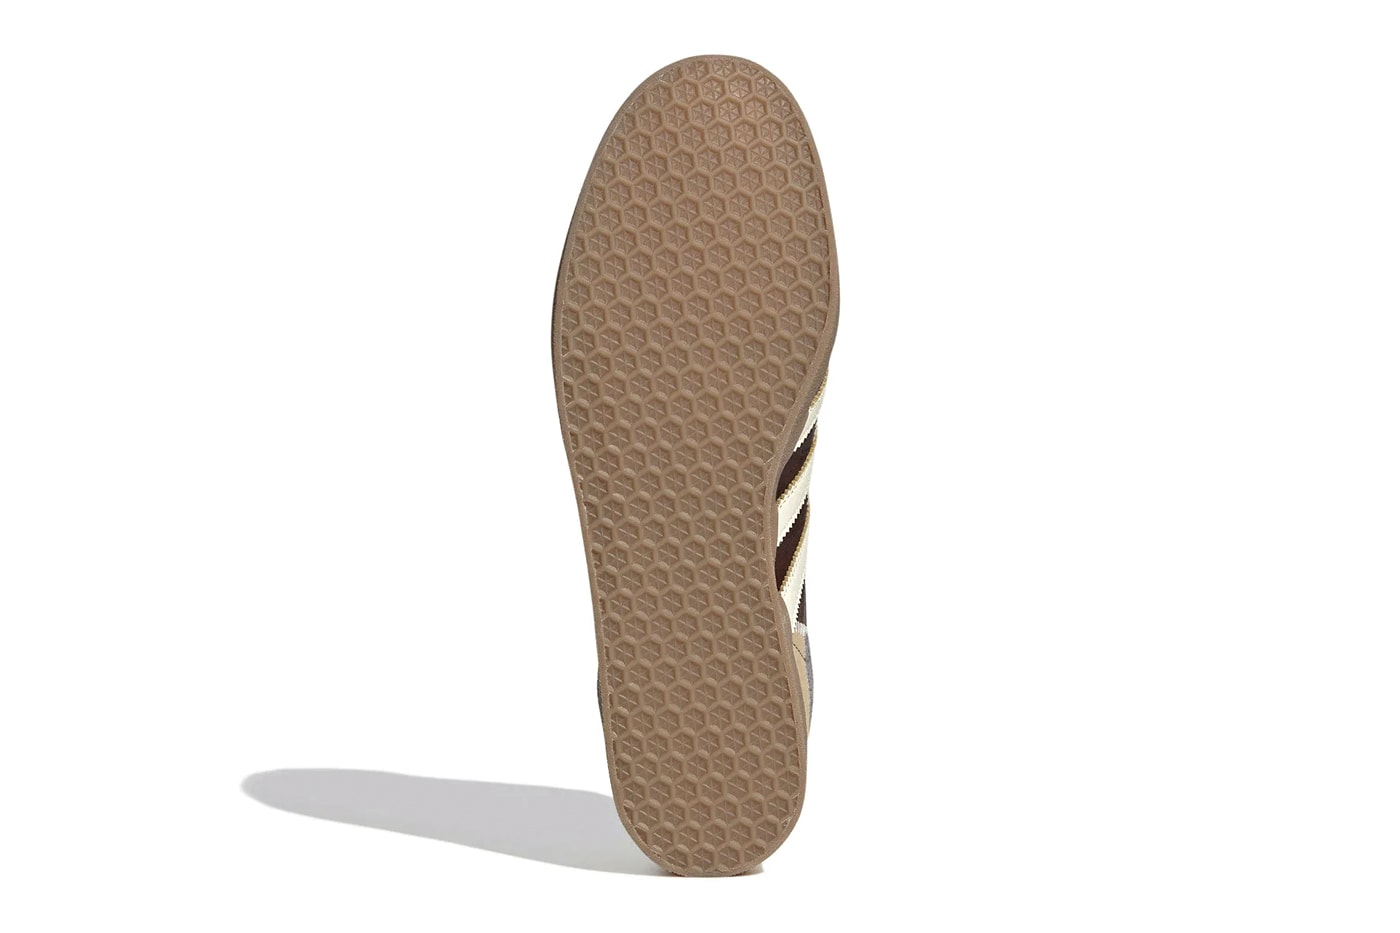 atmos x adidas Gazelle 85 “Patchwork” Release Info